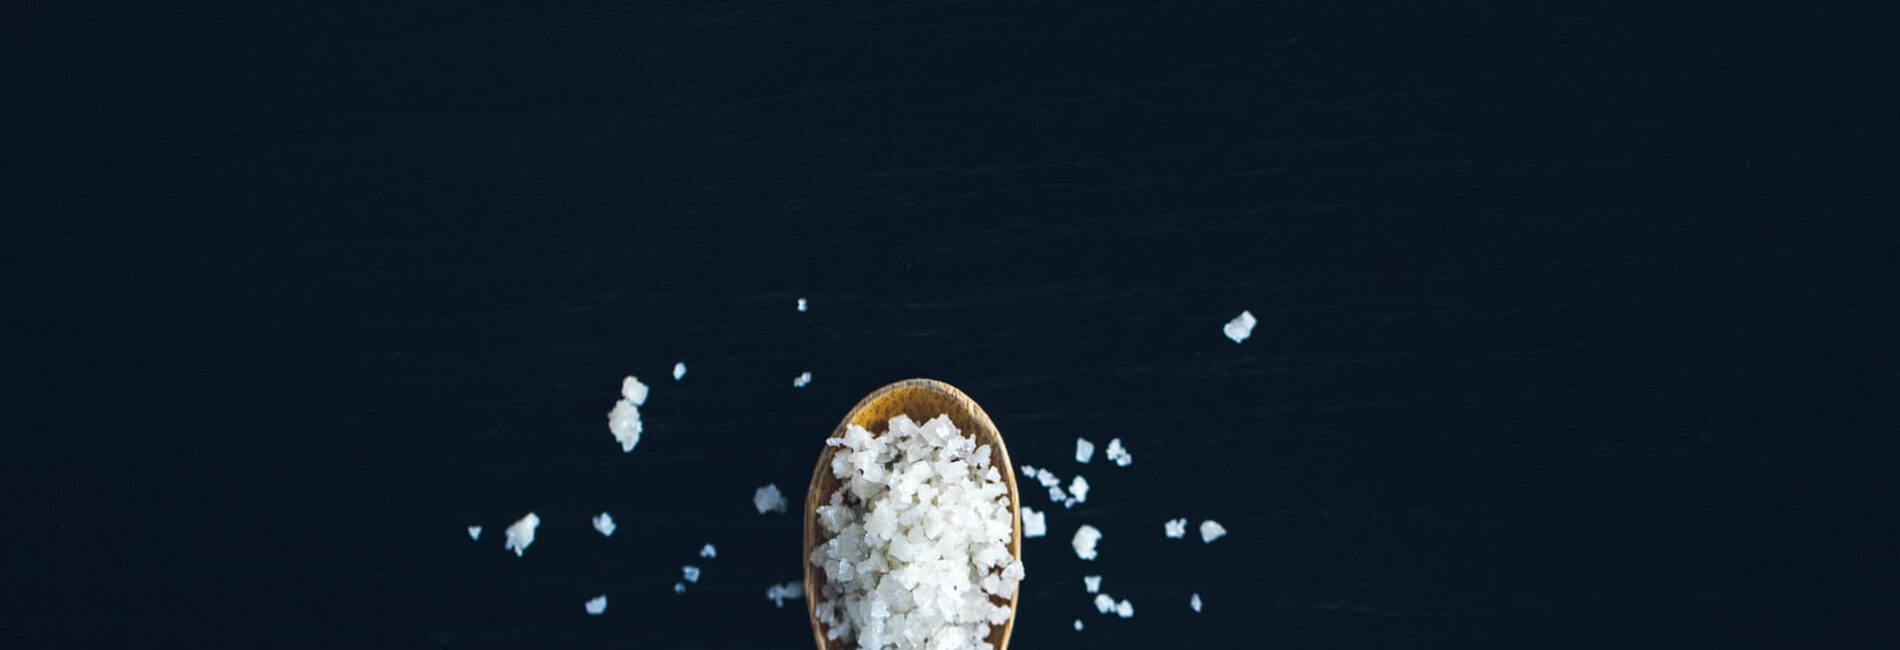 Why We Should Eat Less Salt